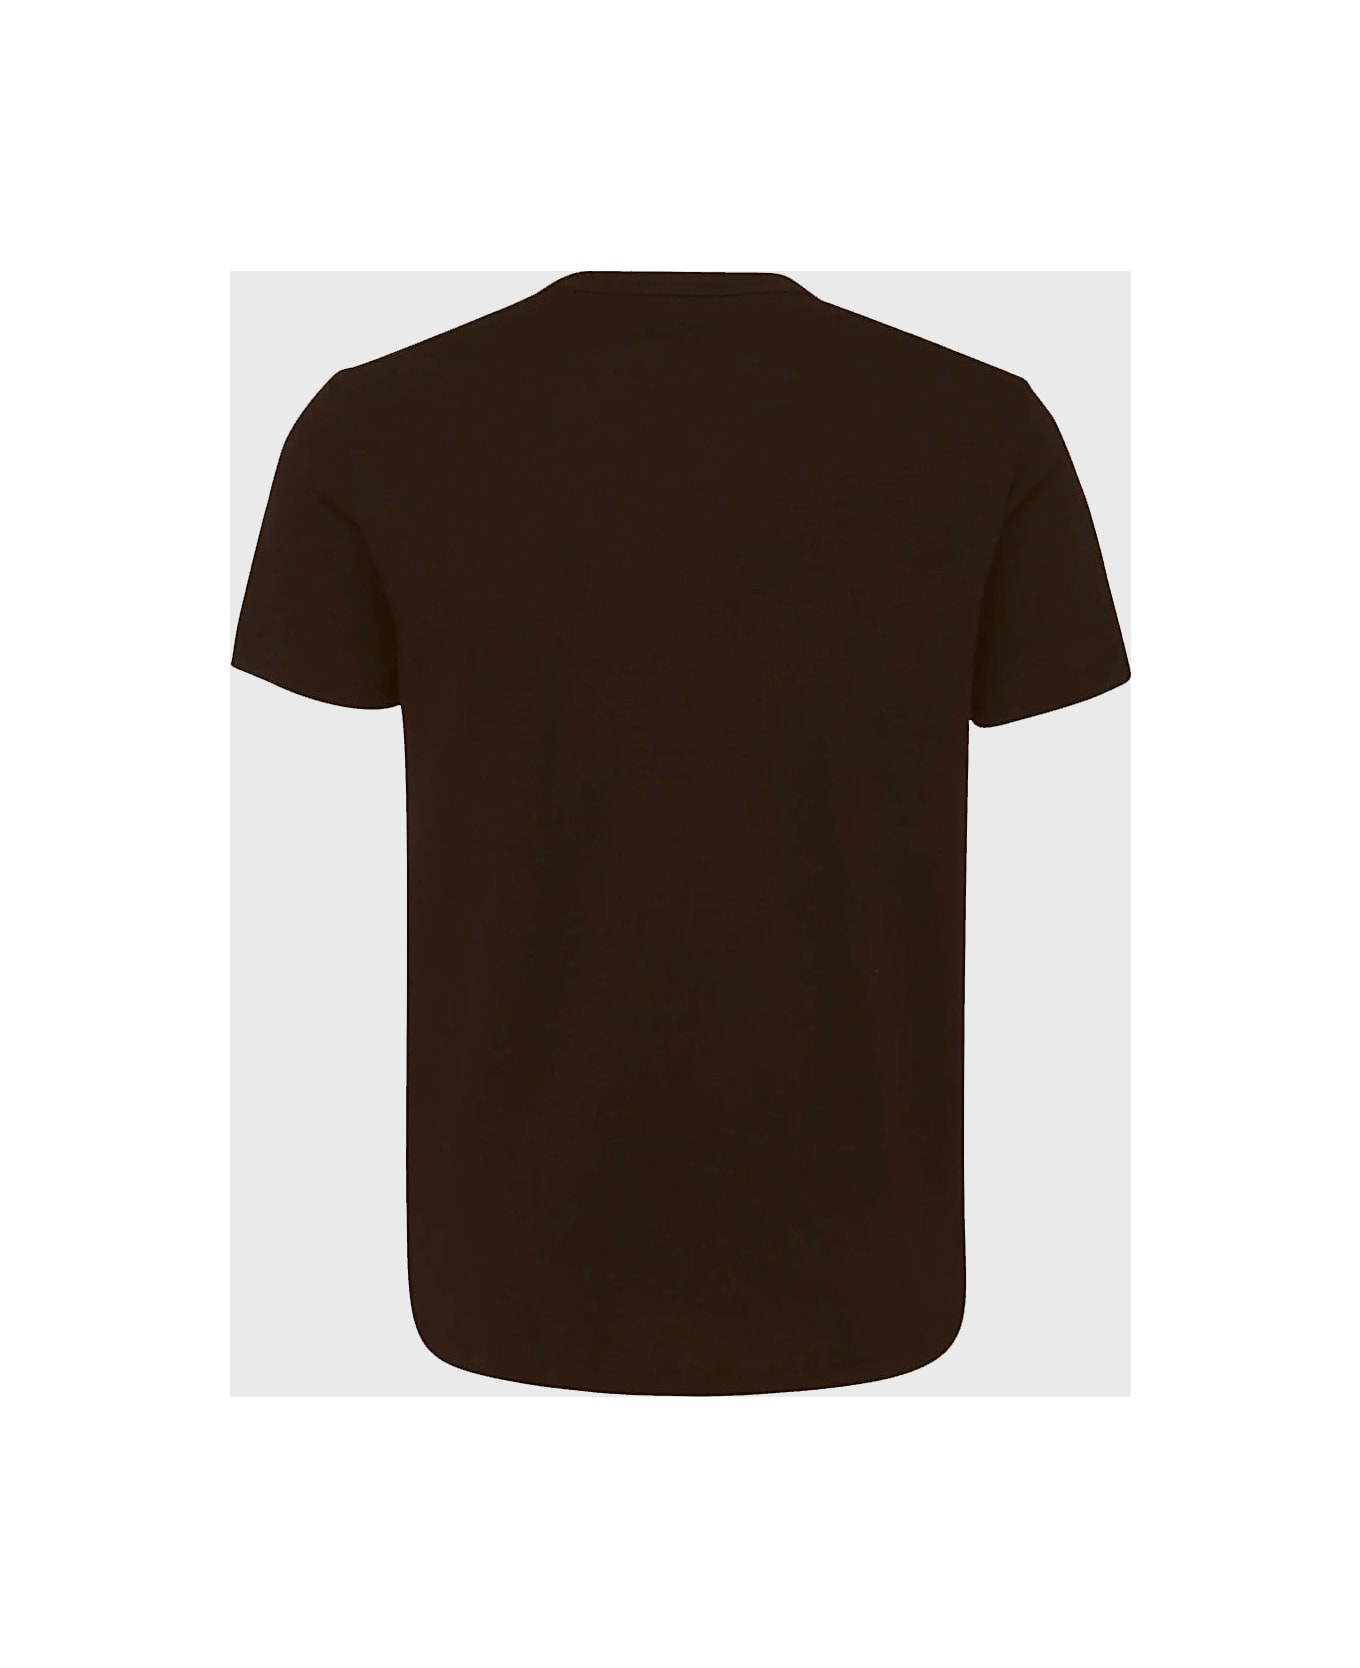 Tom Ford Ebony Cotton Blend T-shirt - Ebony